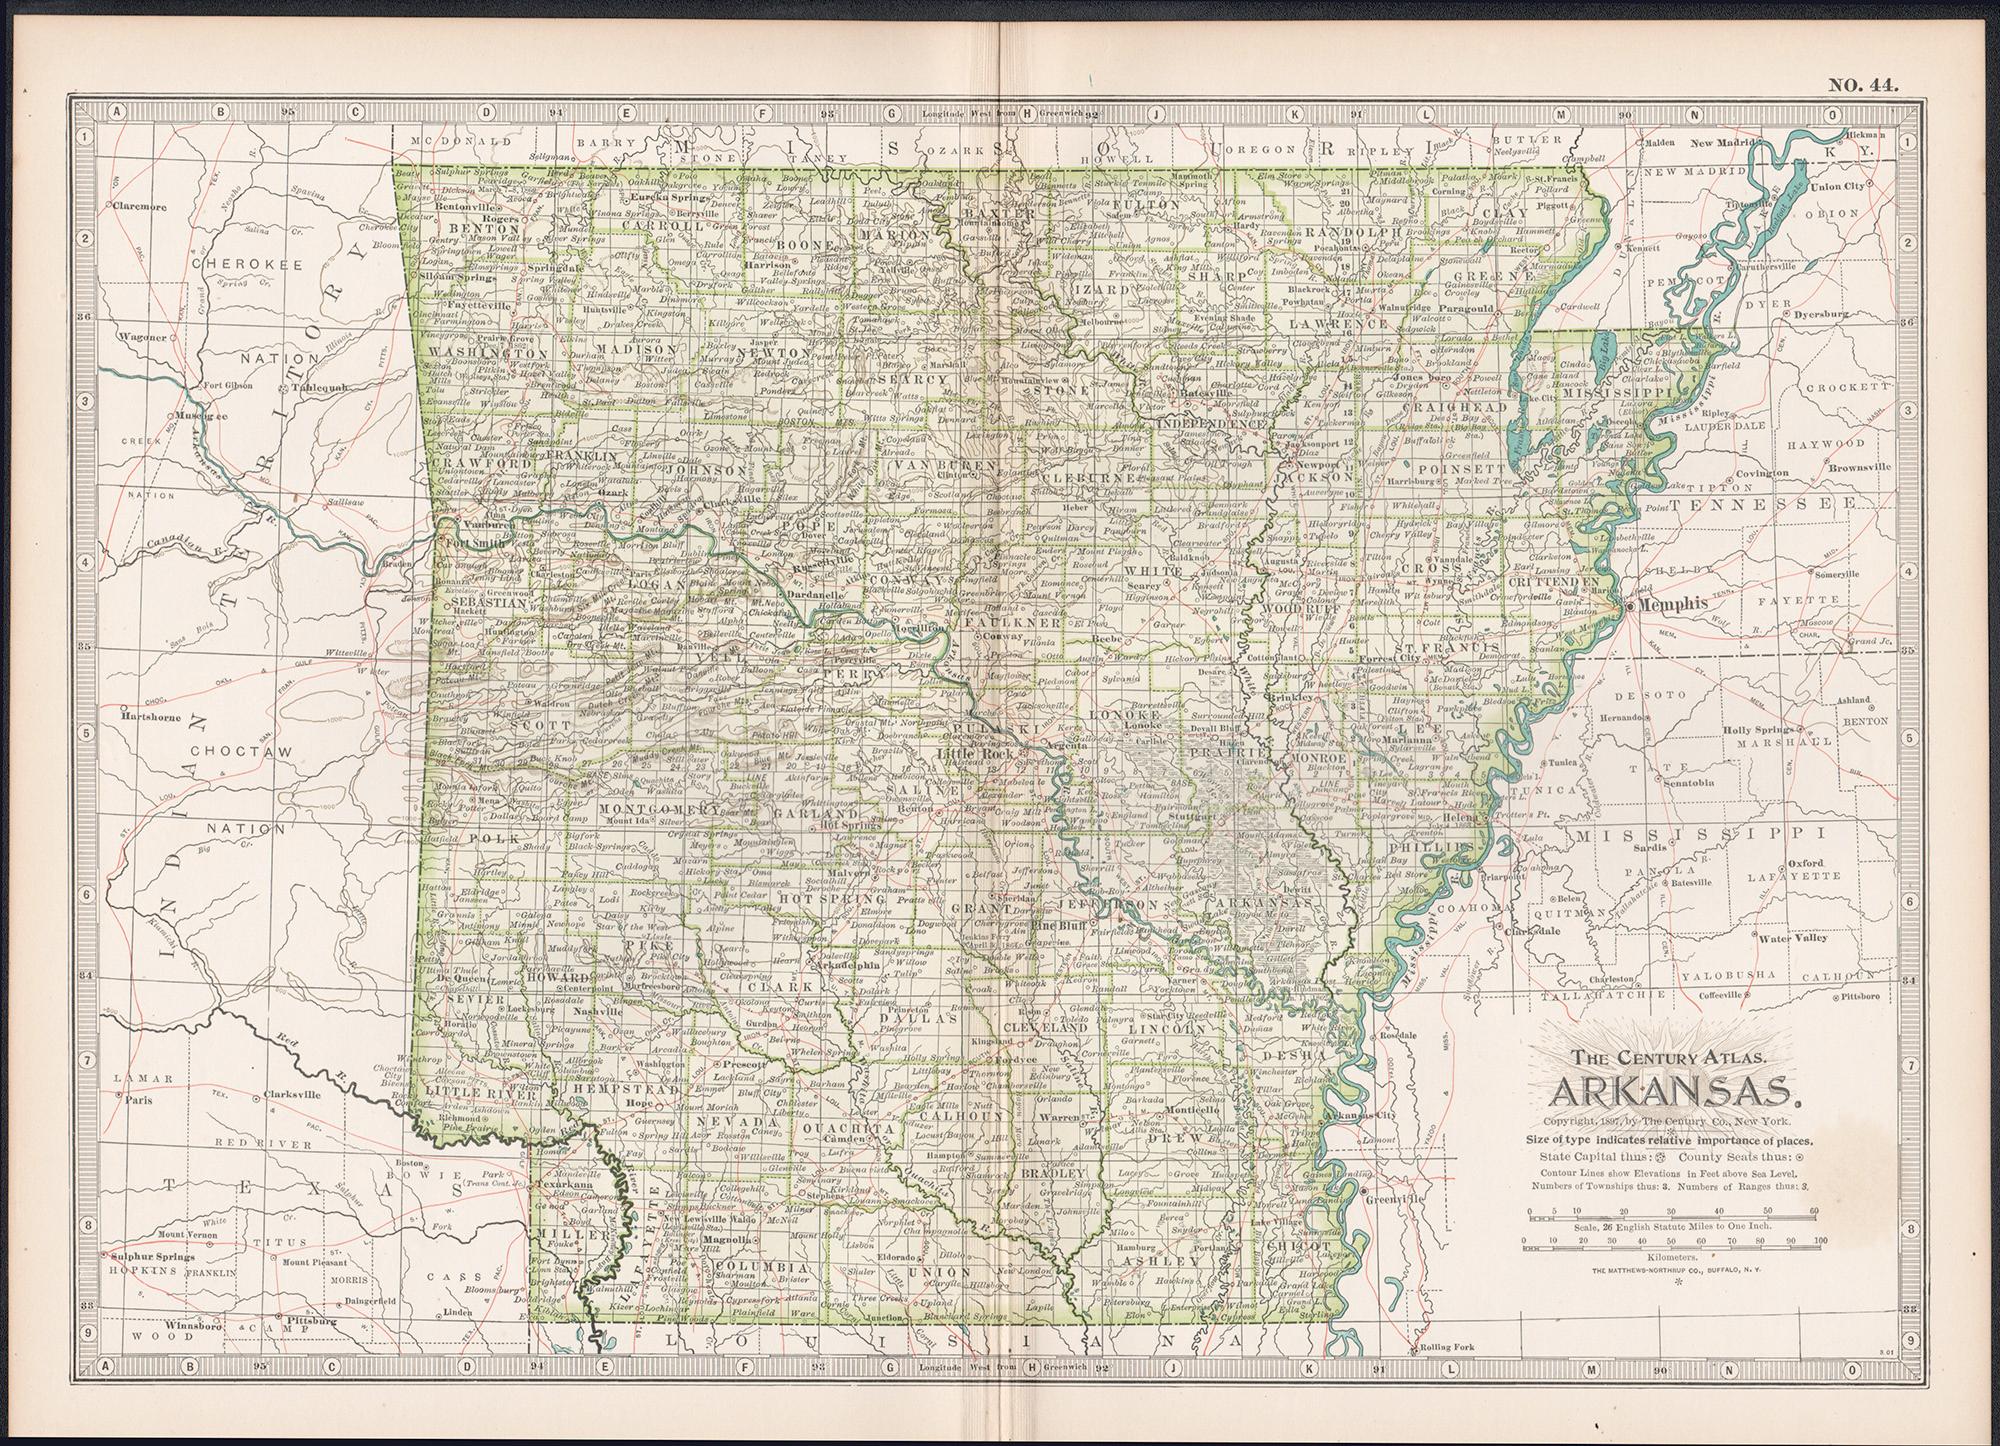 Arkansas. USA. Century Atlas state antique vintage map - Print by Unknown